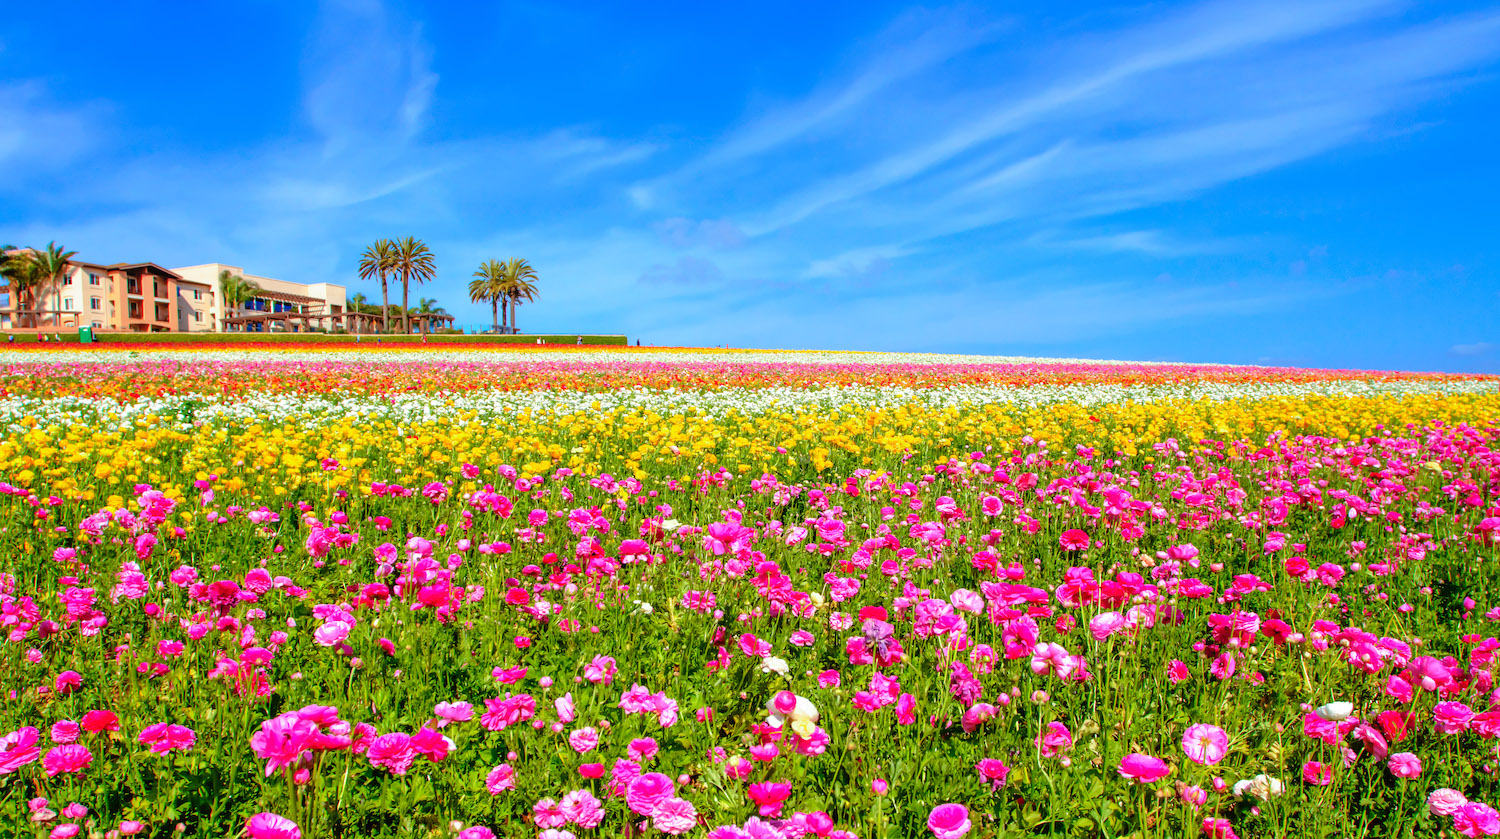 Carlsbad Flower Fields in San Diego during Spring